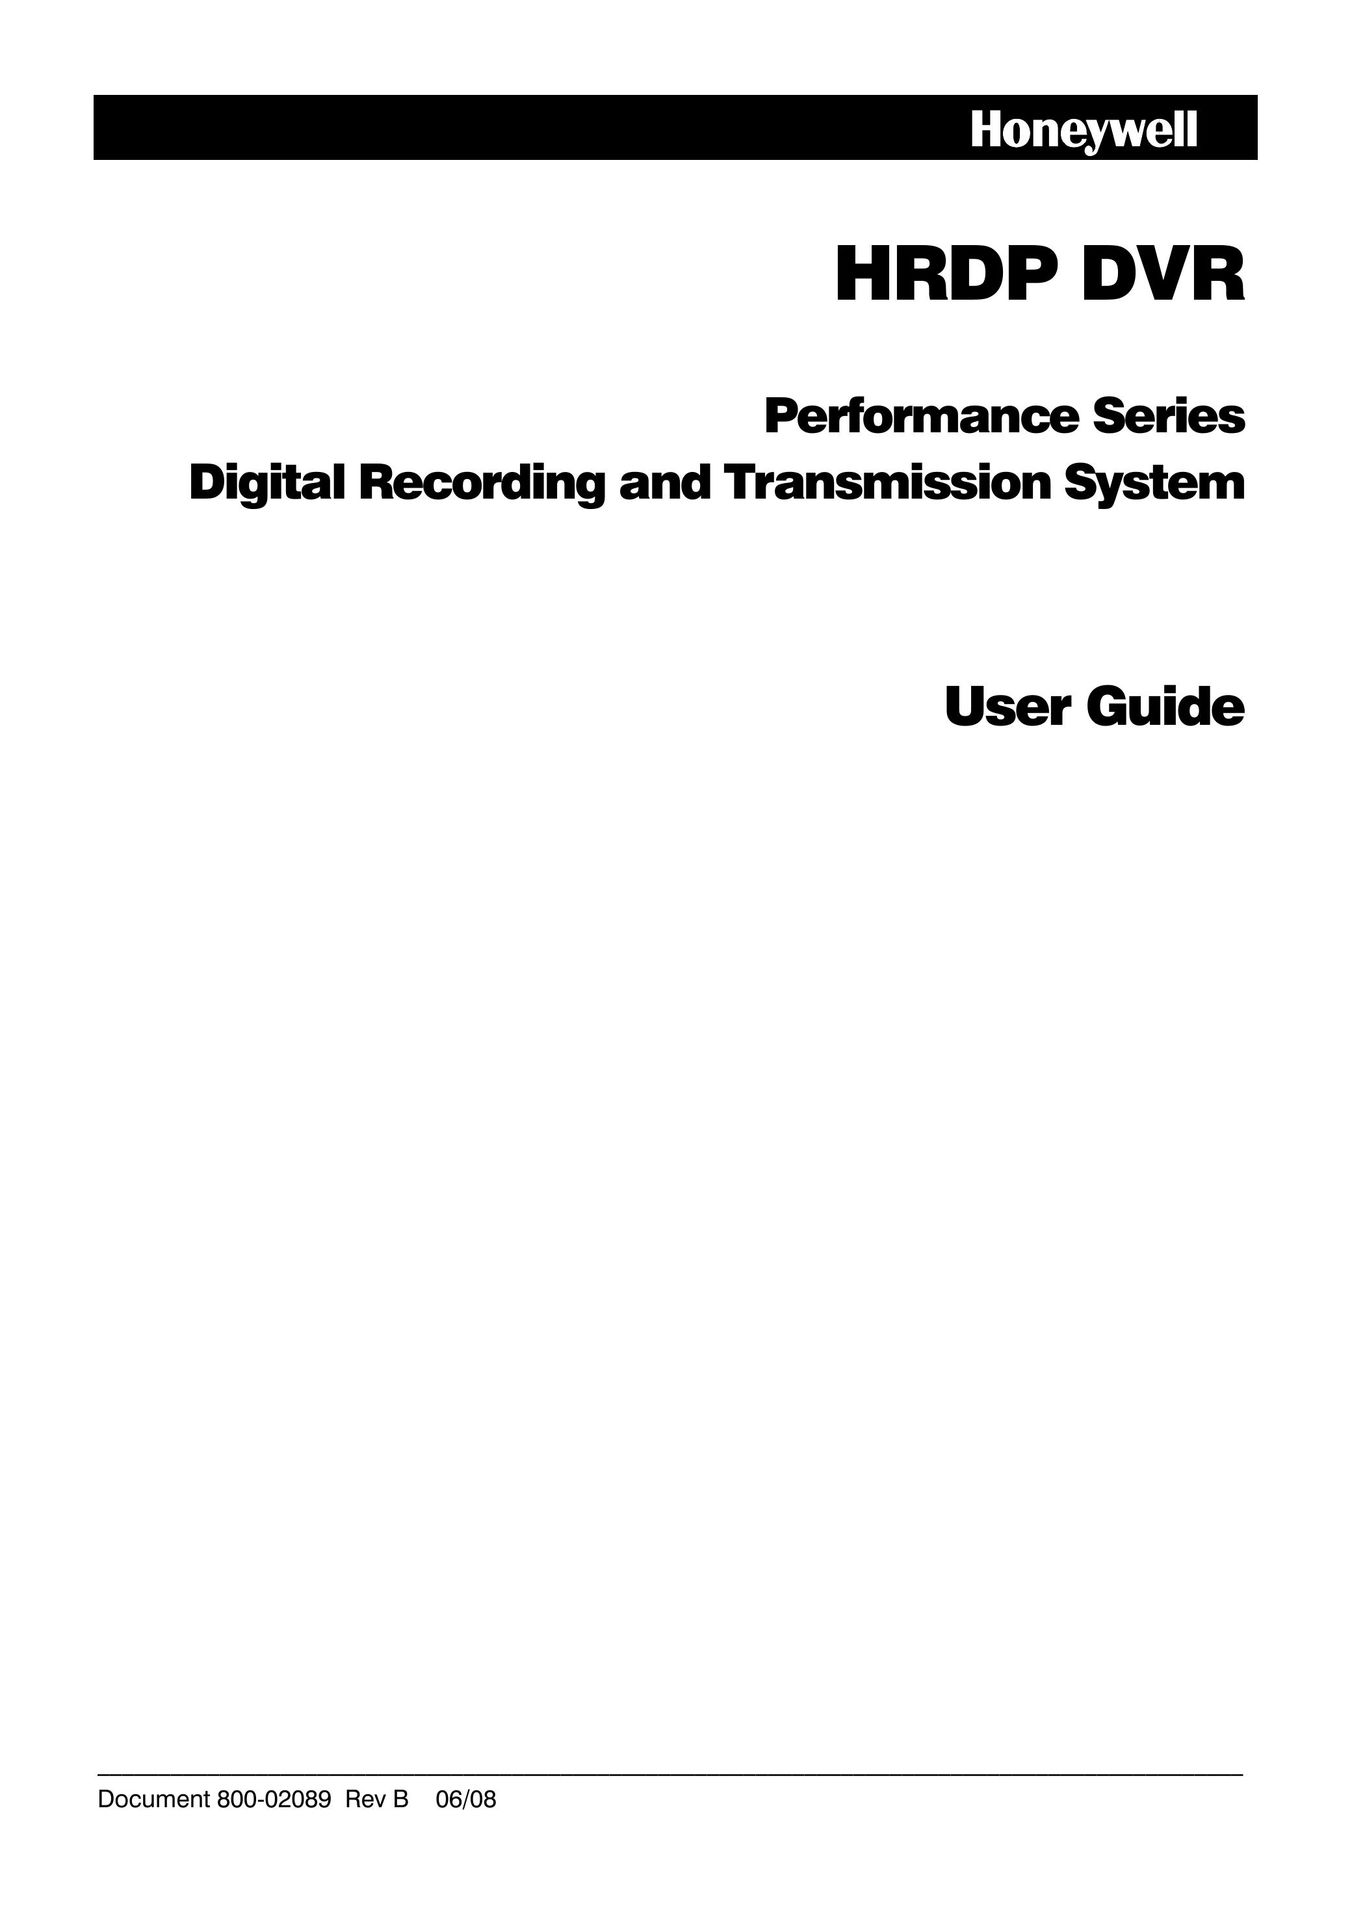 Honeywell HRDP DVR DVR User Manual